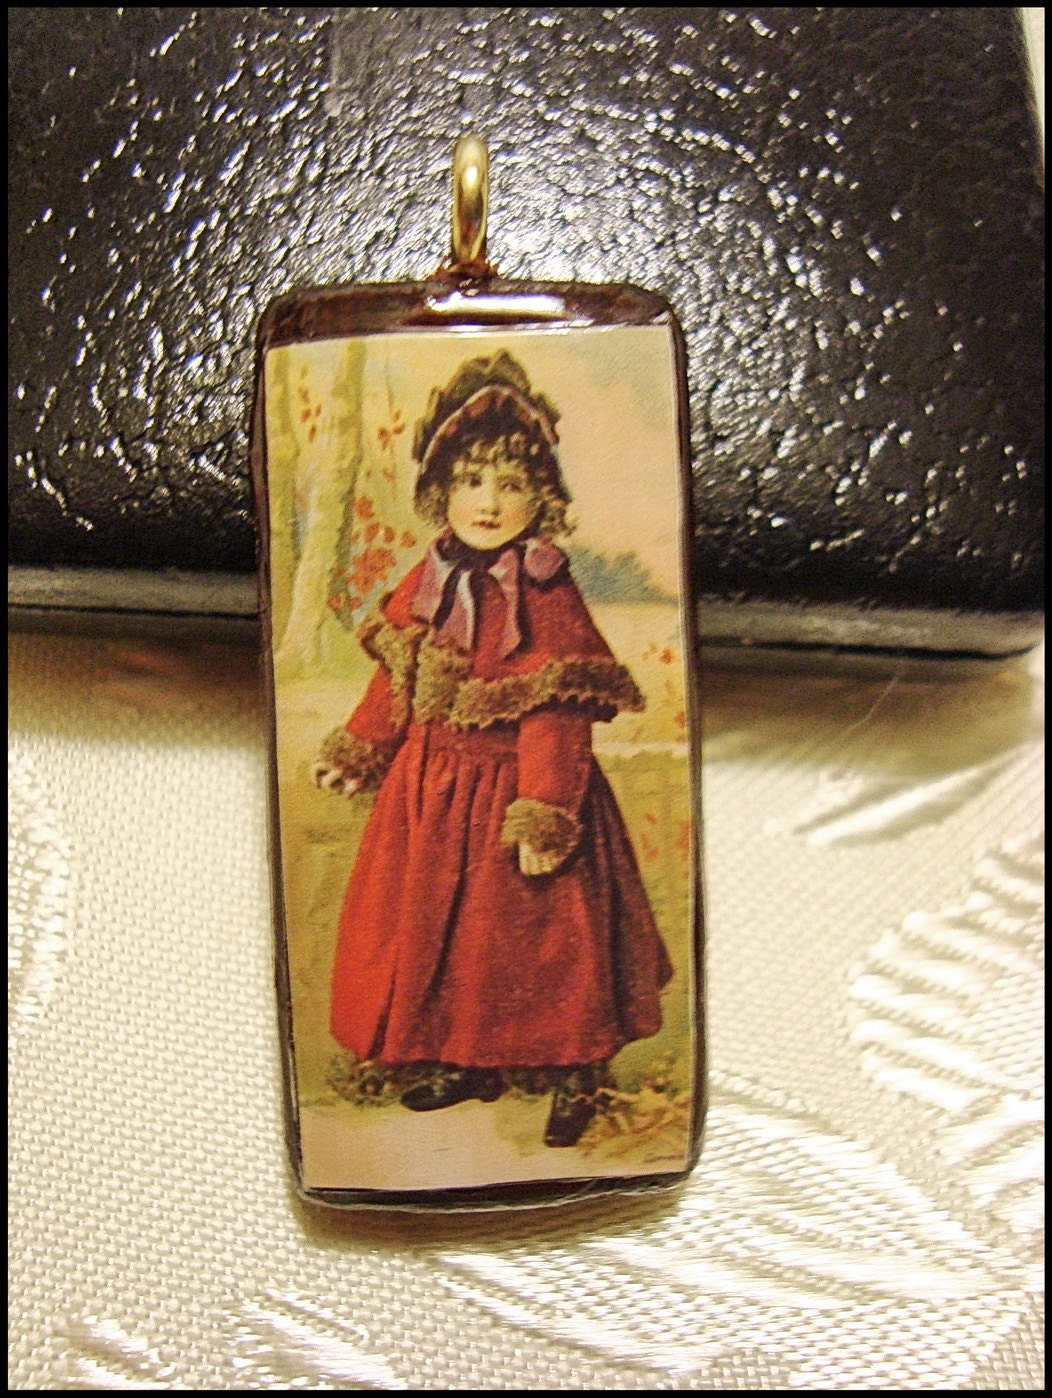 Bamboo Pendant, Vintage Art, Victorian Girl in Red Coat